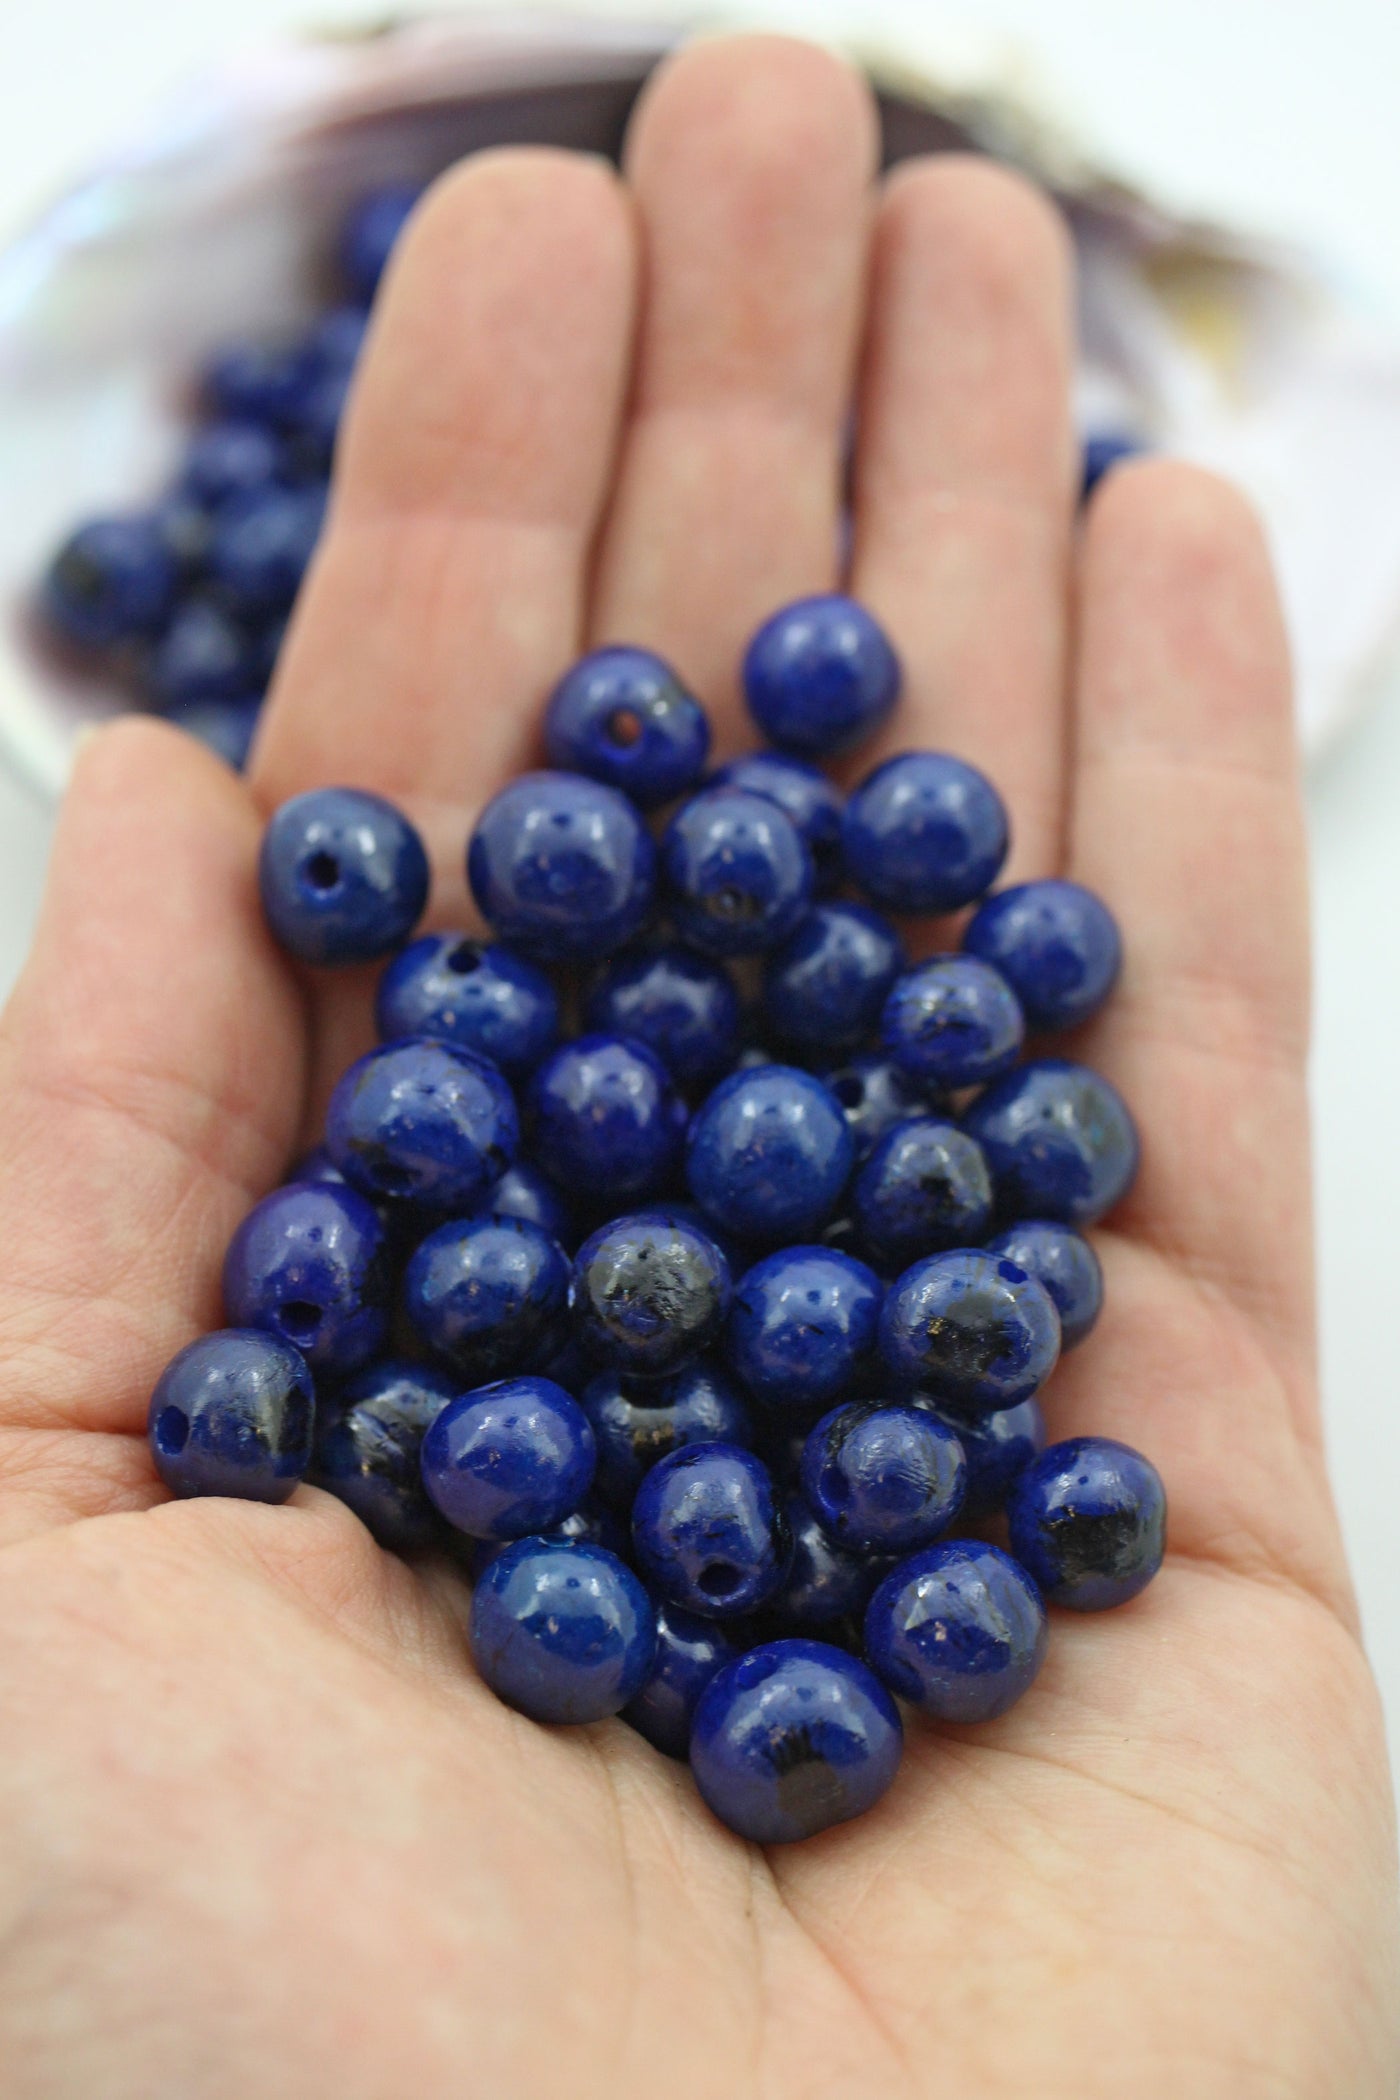 Navy Blue: Real, Natural Acai Beads, 10mm, 100 beads